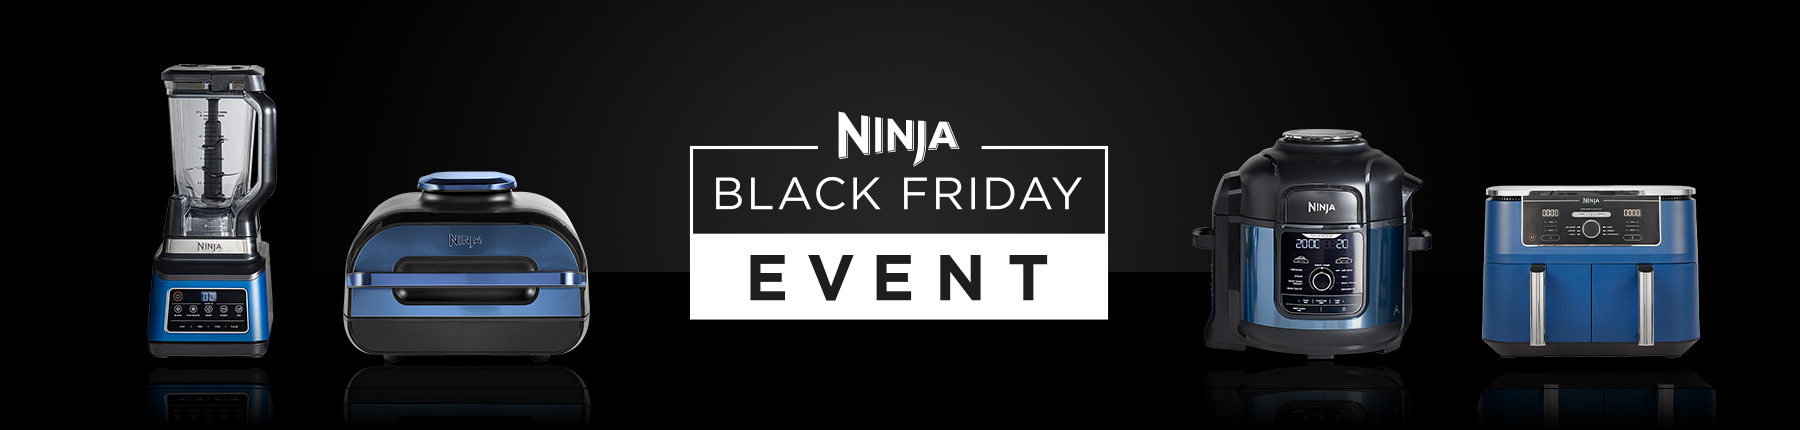 Ninja Black Friday Event